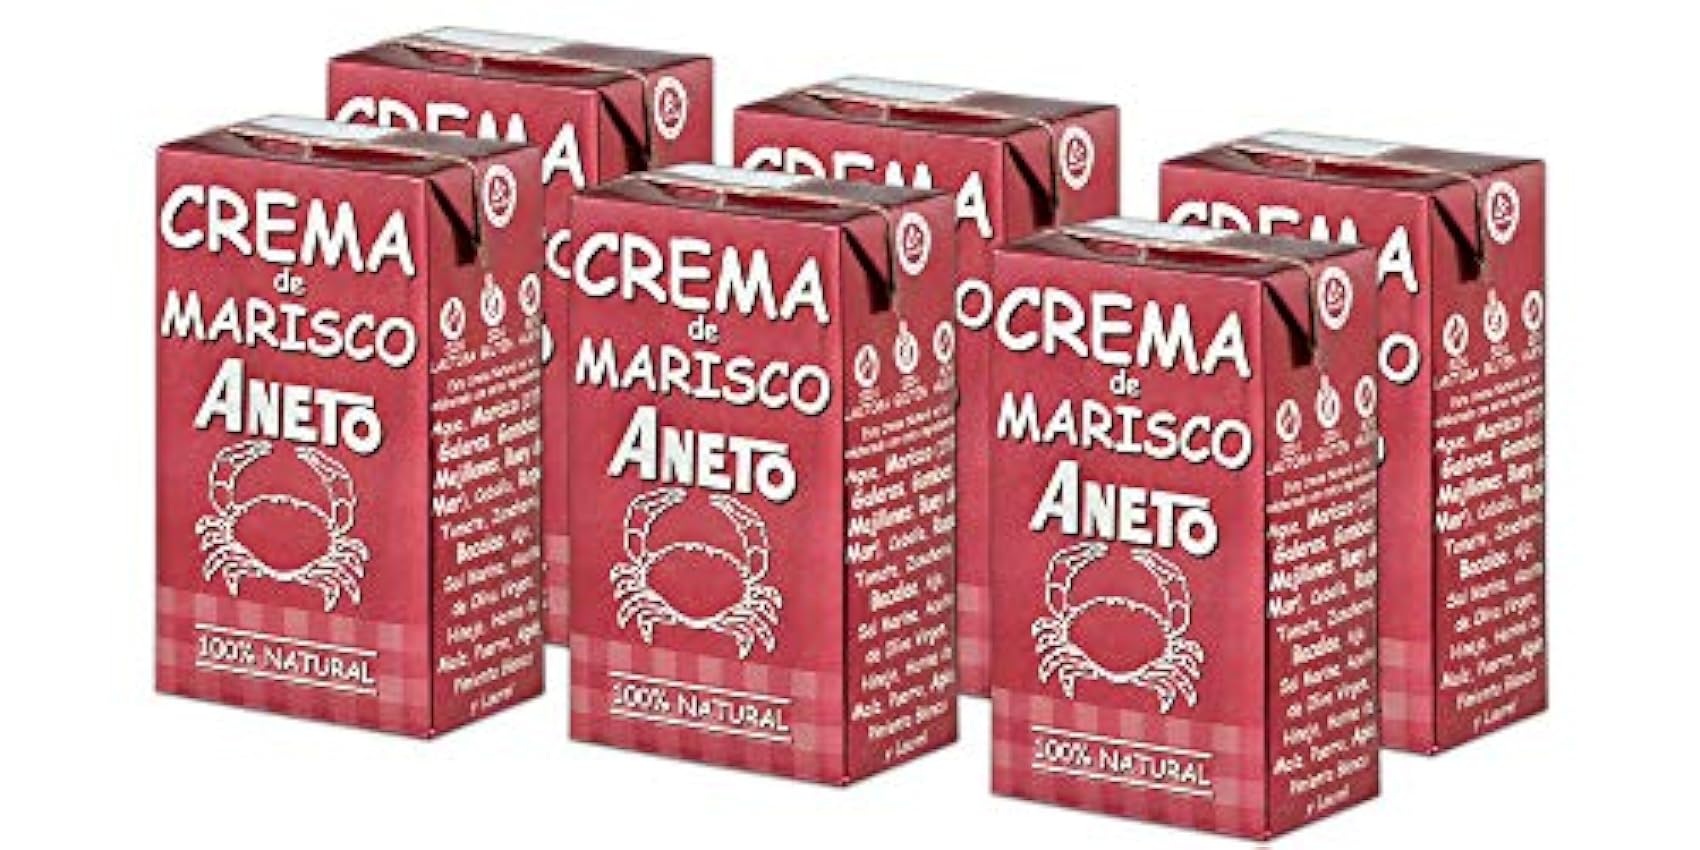 Aneto 100% Natural - Crema de Marisco - caja de 6 unida